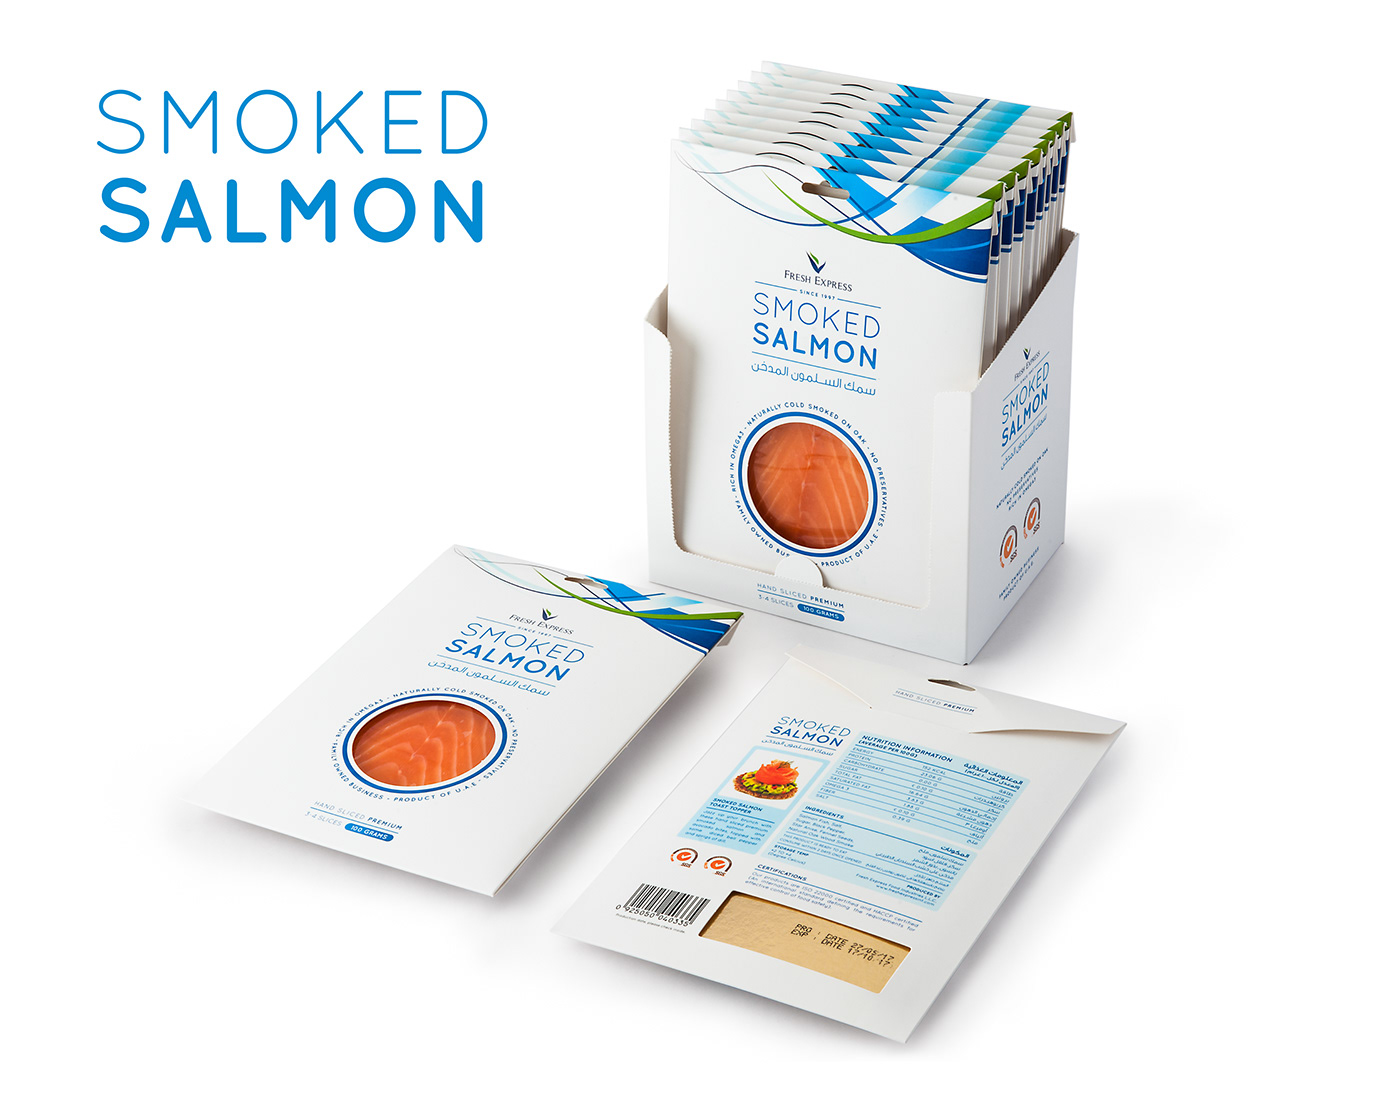 akshaythinks designer in dubai Fresh Express fresh express int graphic design  minimal package design  product packaging design Seafood Packaging smoked salmon